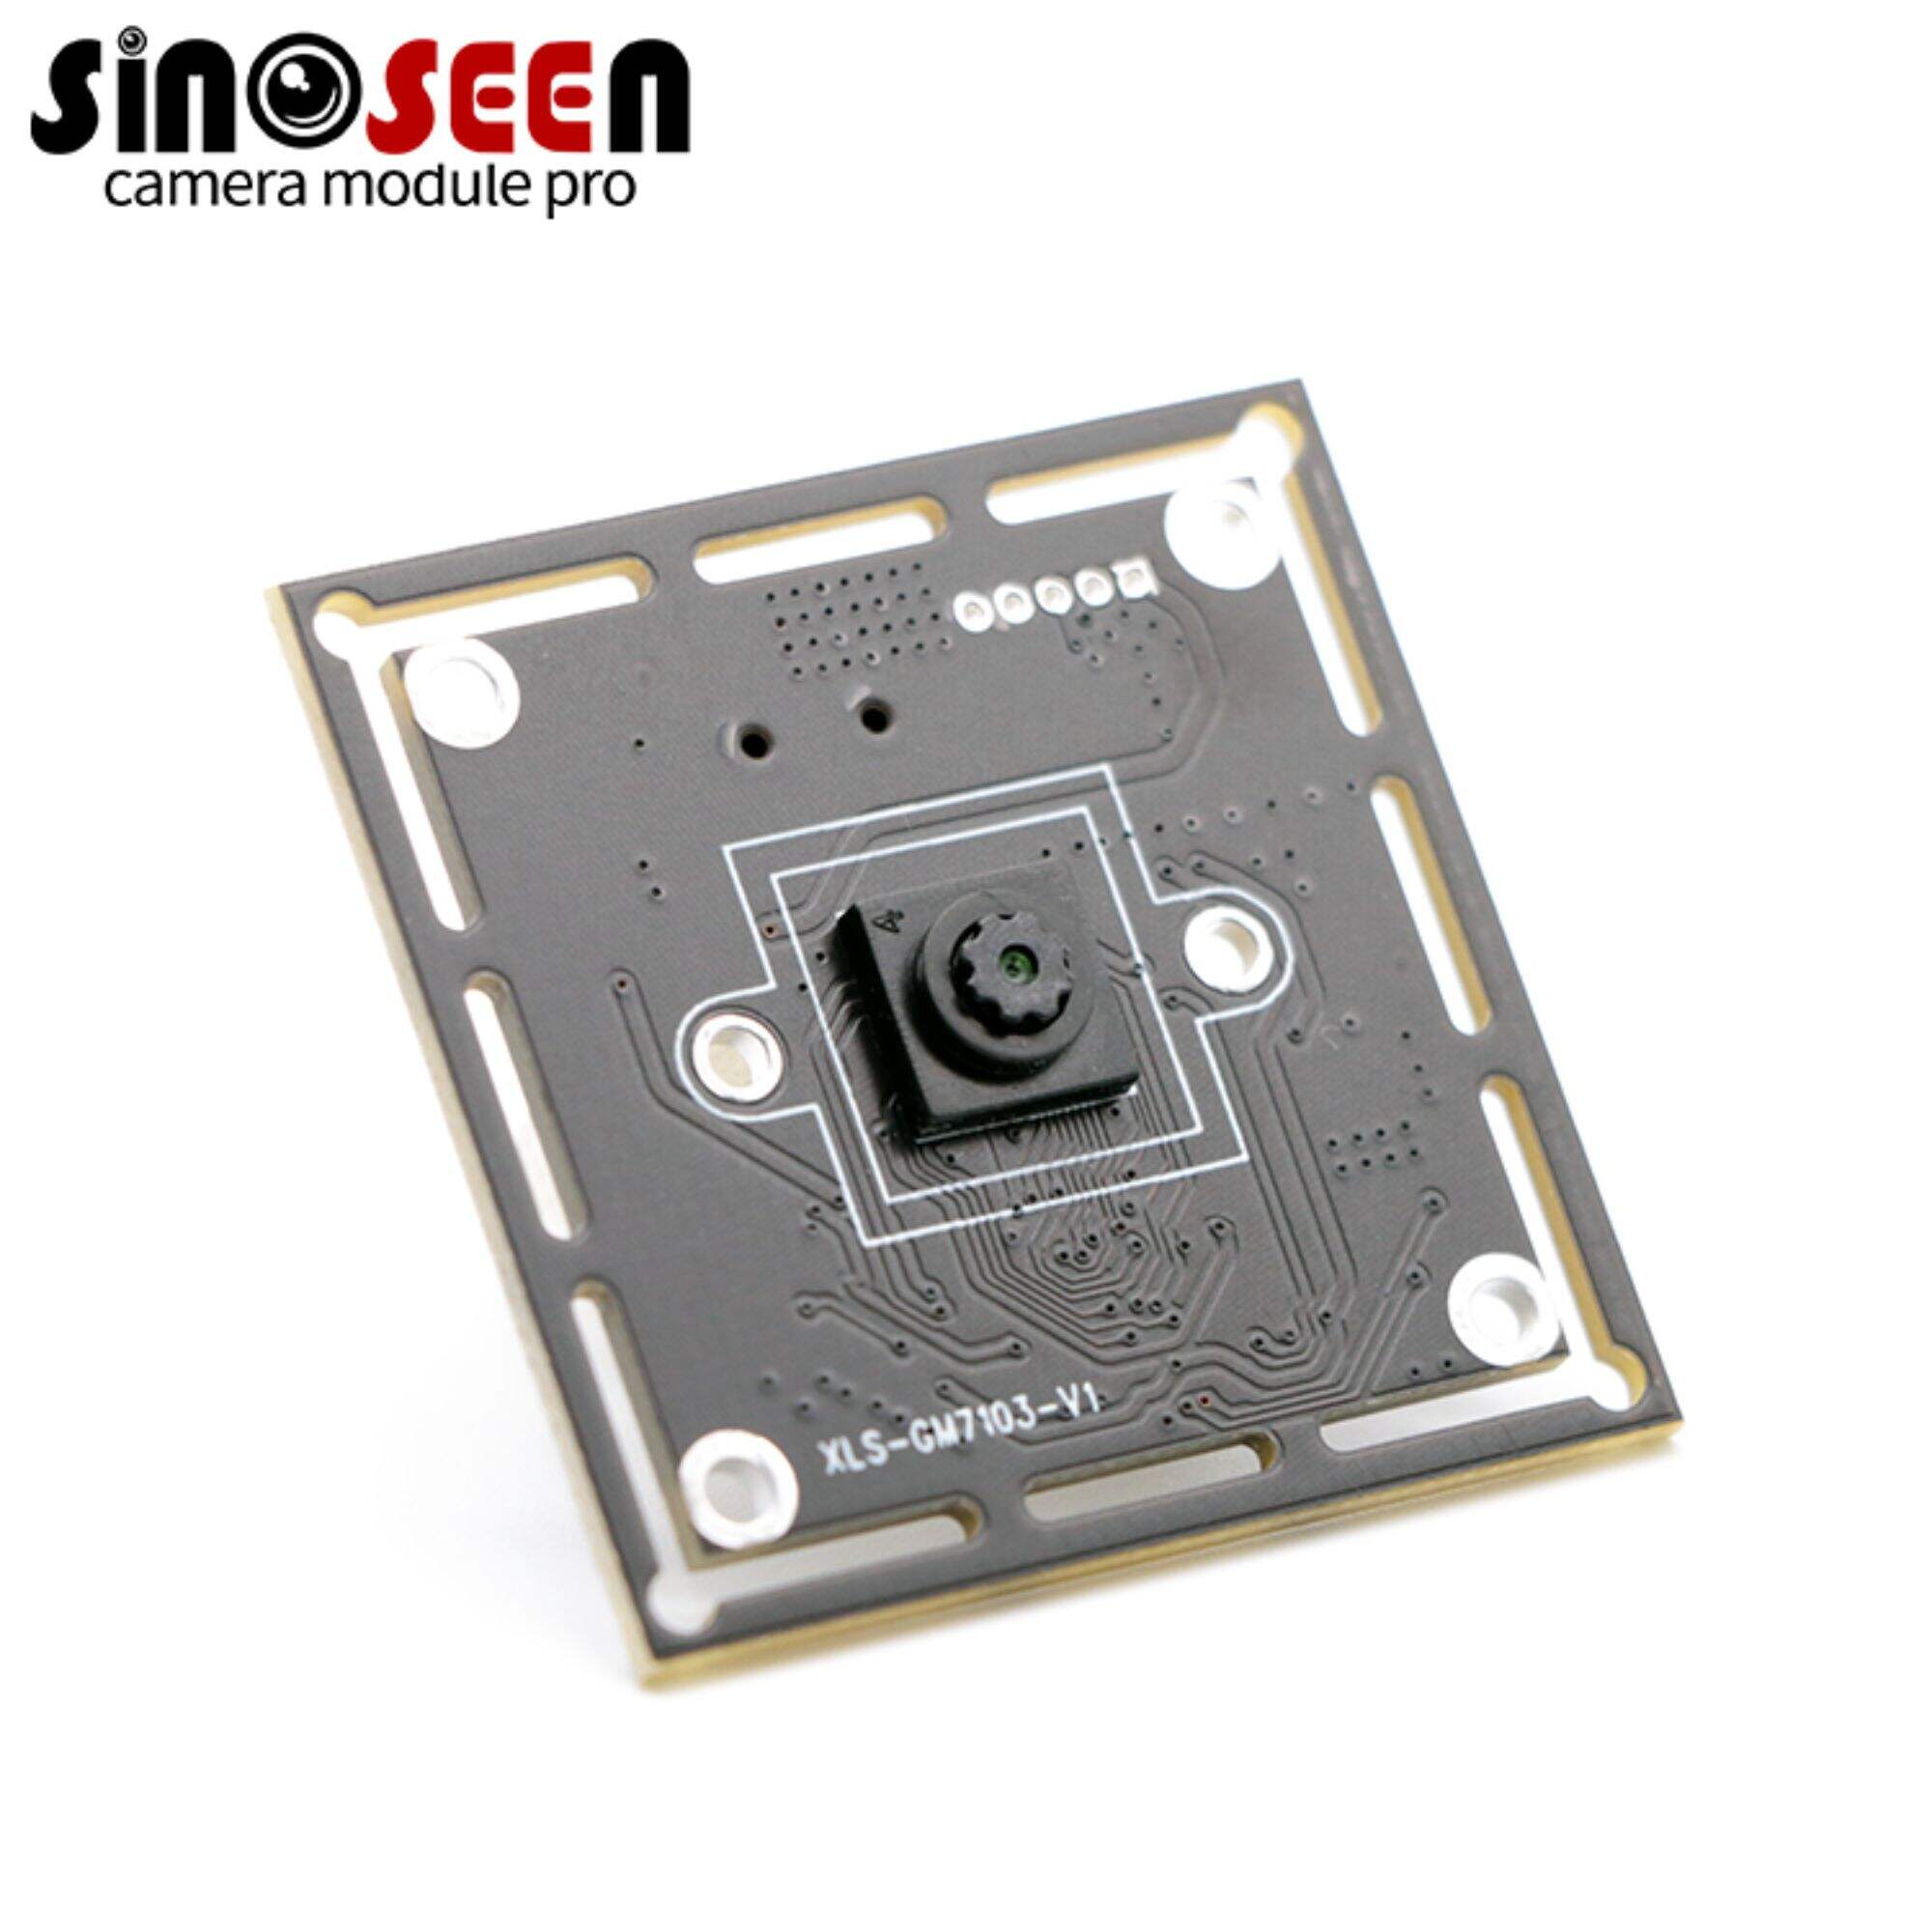 0.3MP low power USB micro camera module for the Raspberry PI GC0328 CMOS sensor